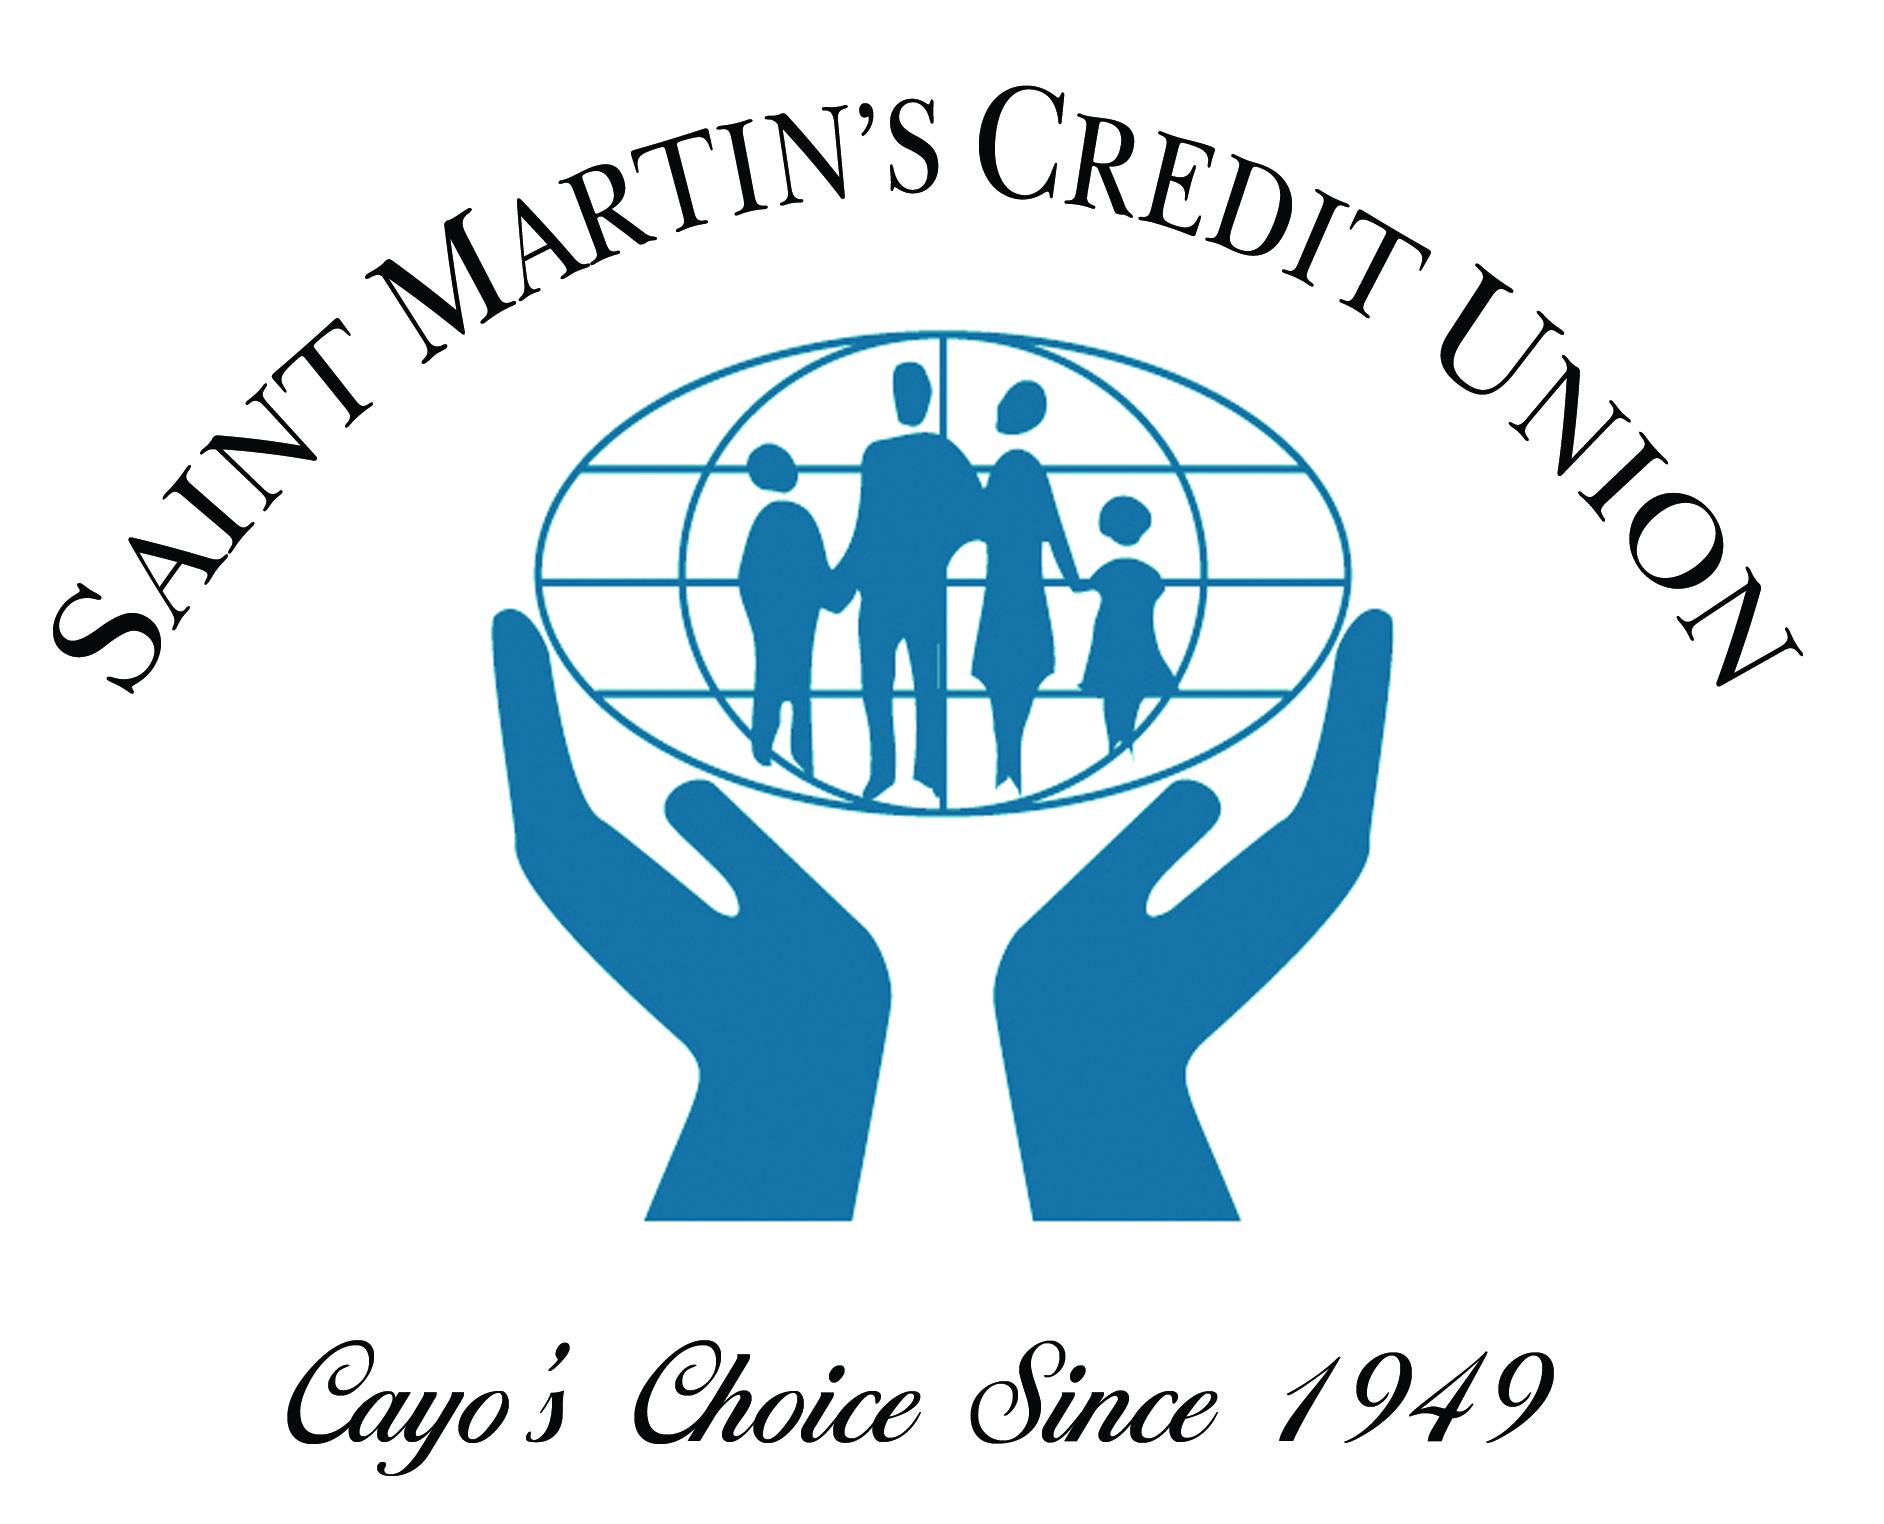 Saint Martin's Credit Union - Belize, Central America